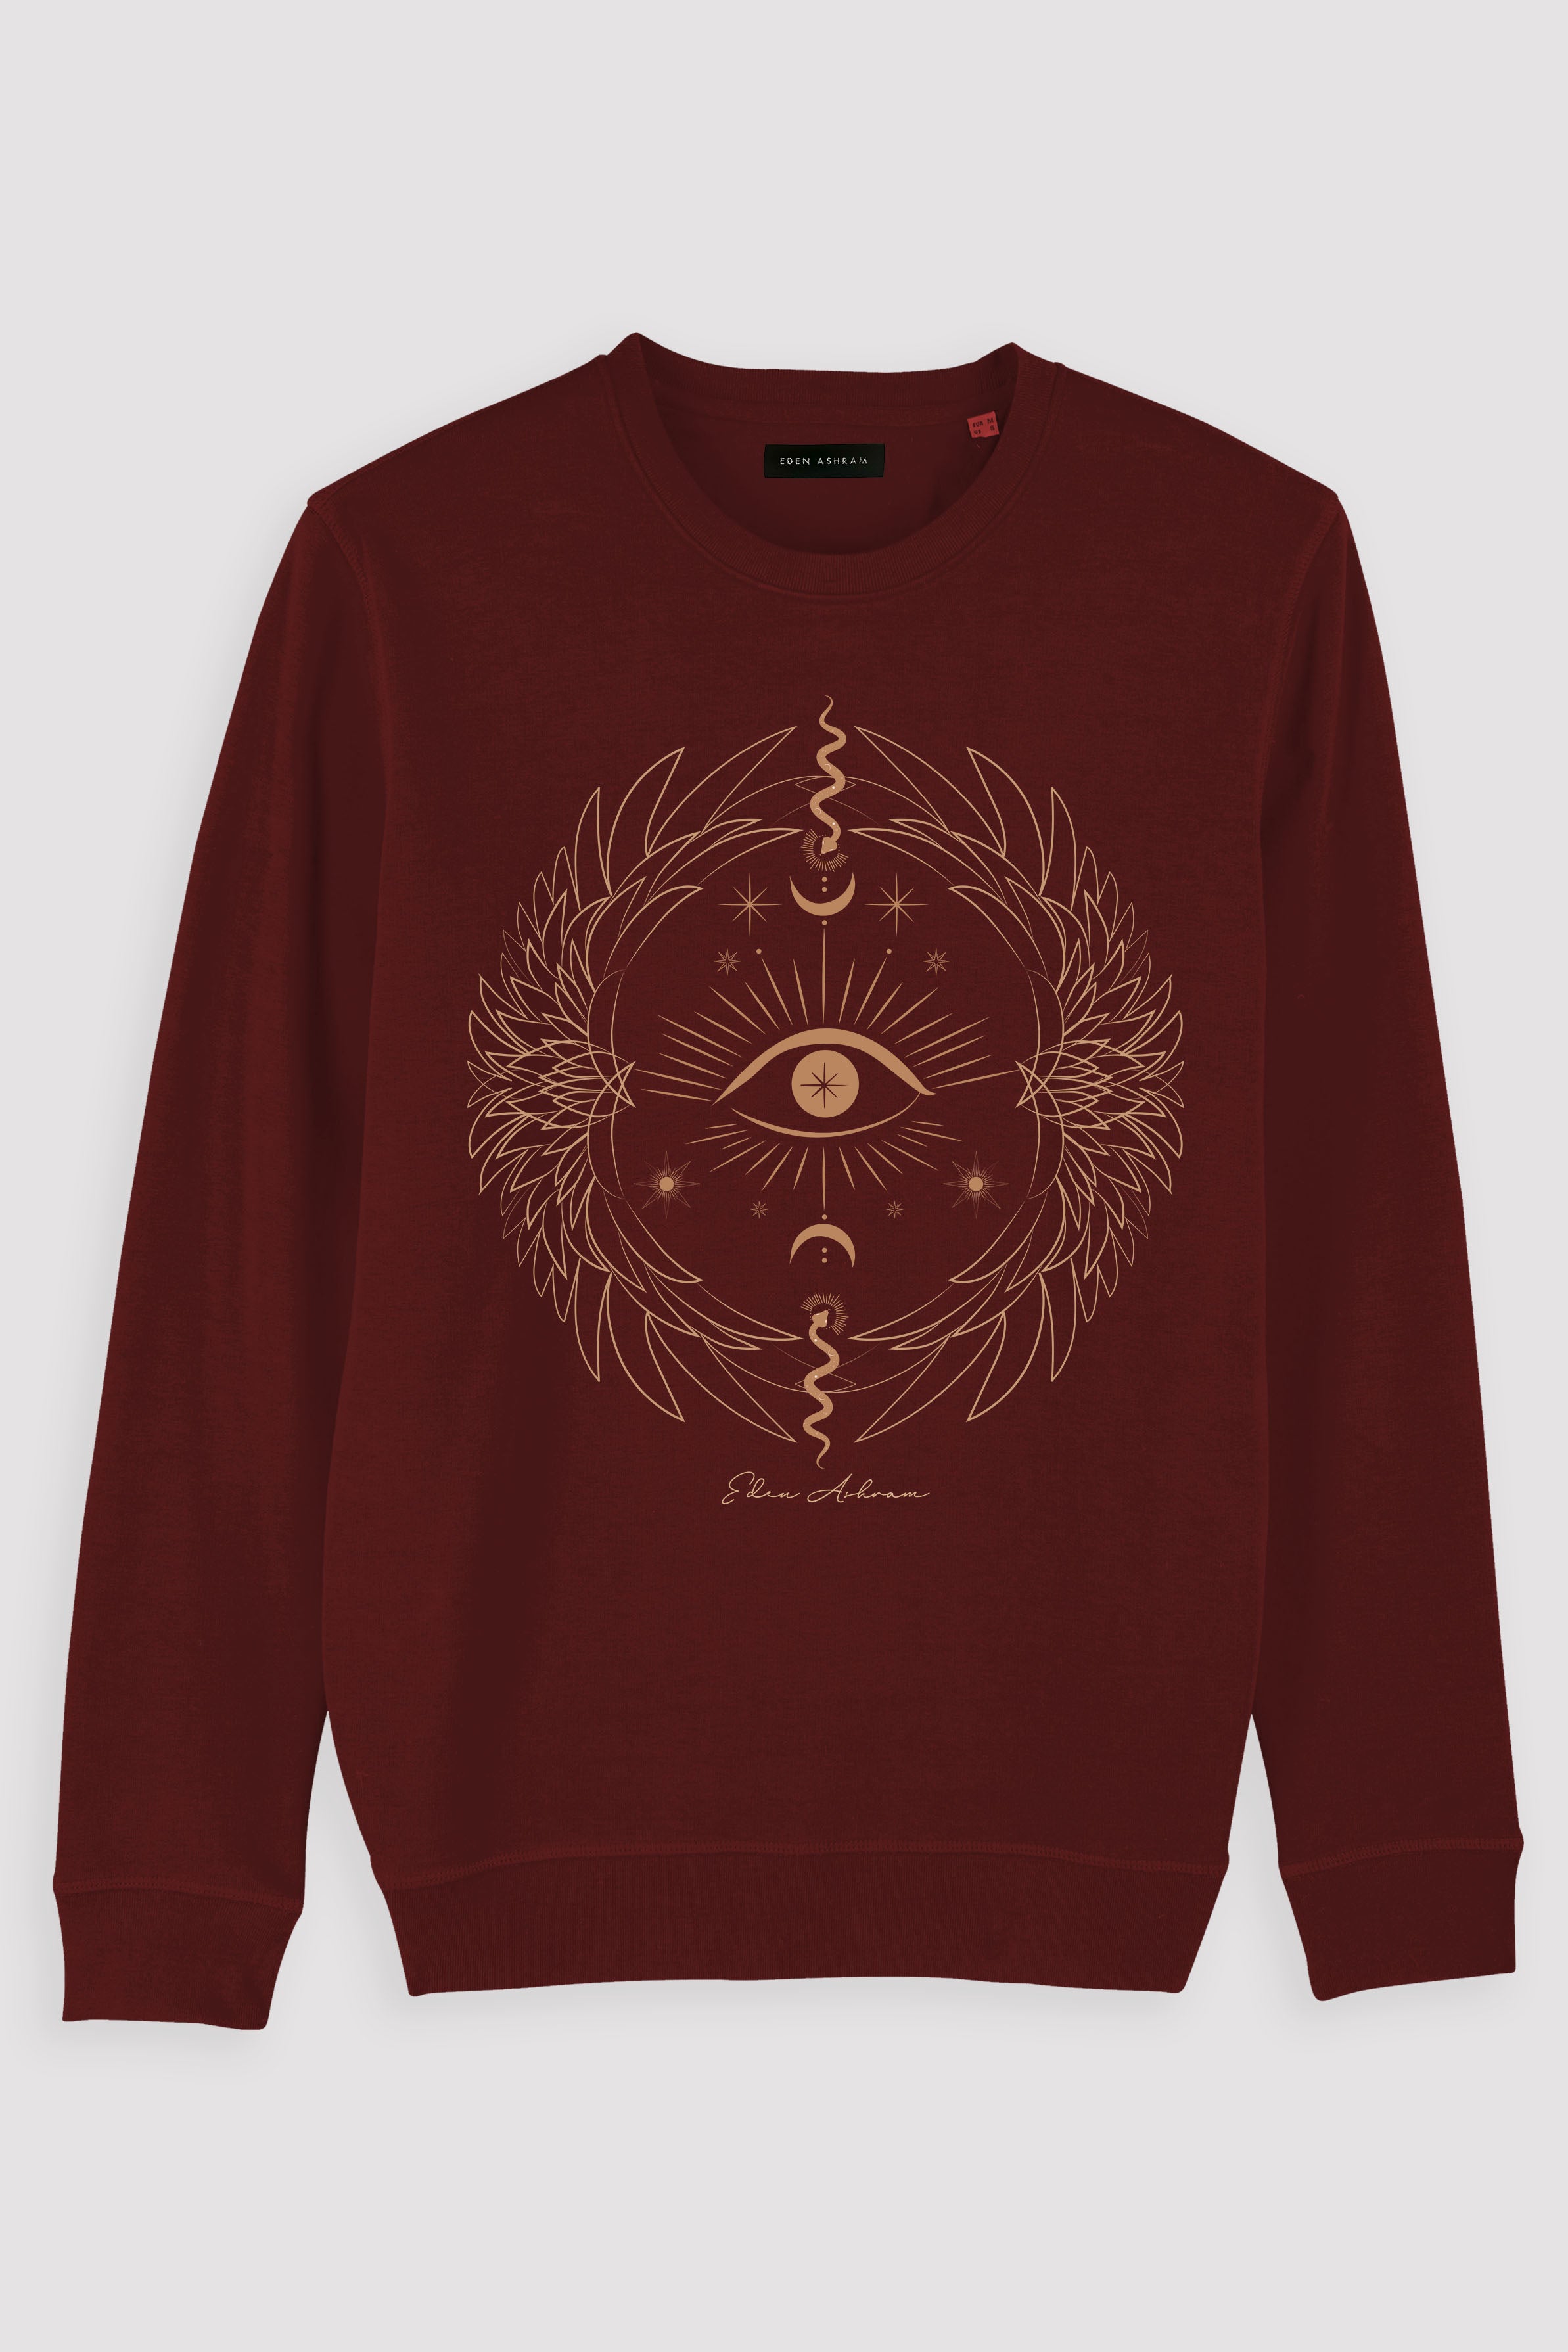 EDEN ASHRAM Mystical Eye Premium Crew Neck Sweatshirt Burgundy